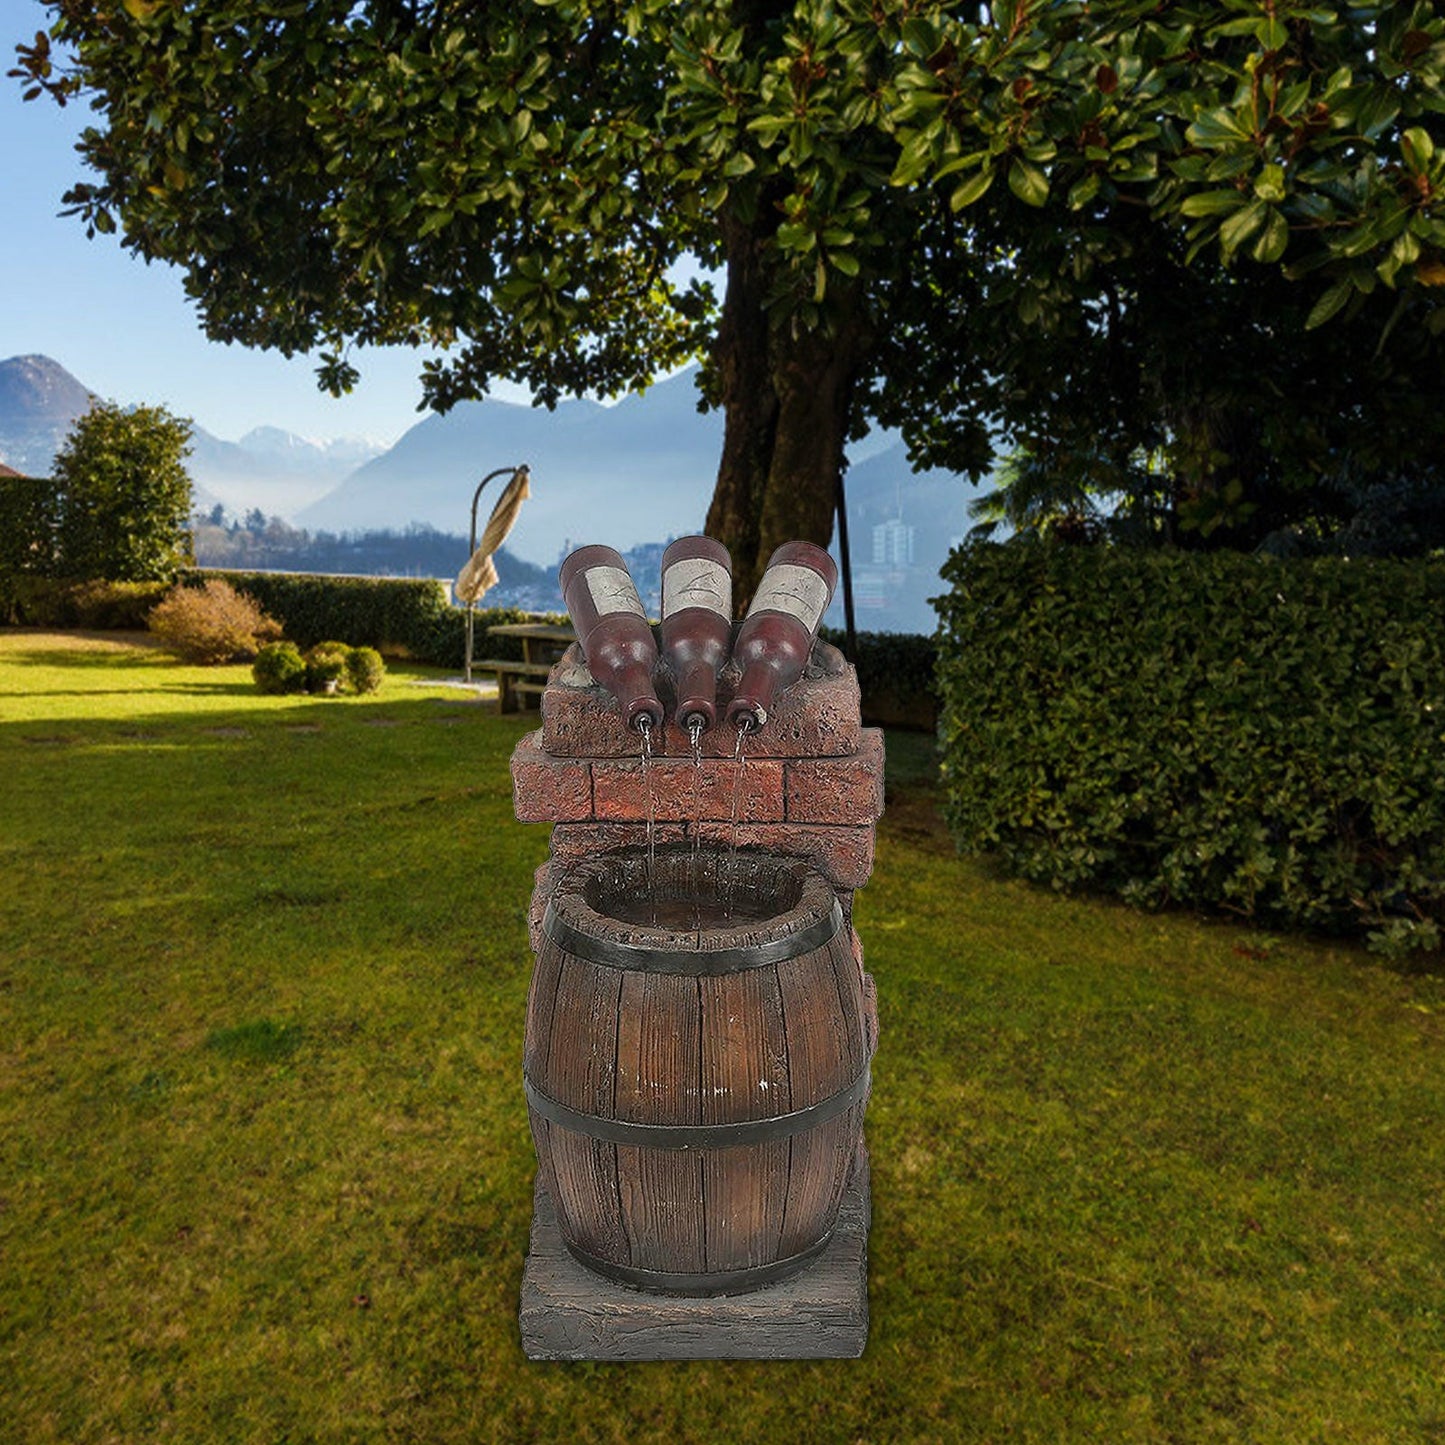 Resin Wine Bottle And Barrel Outdoor Water Fountain Sculpture Courtyard